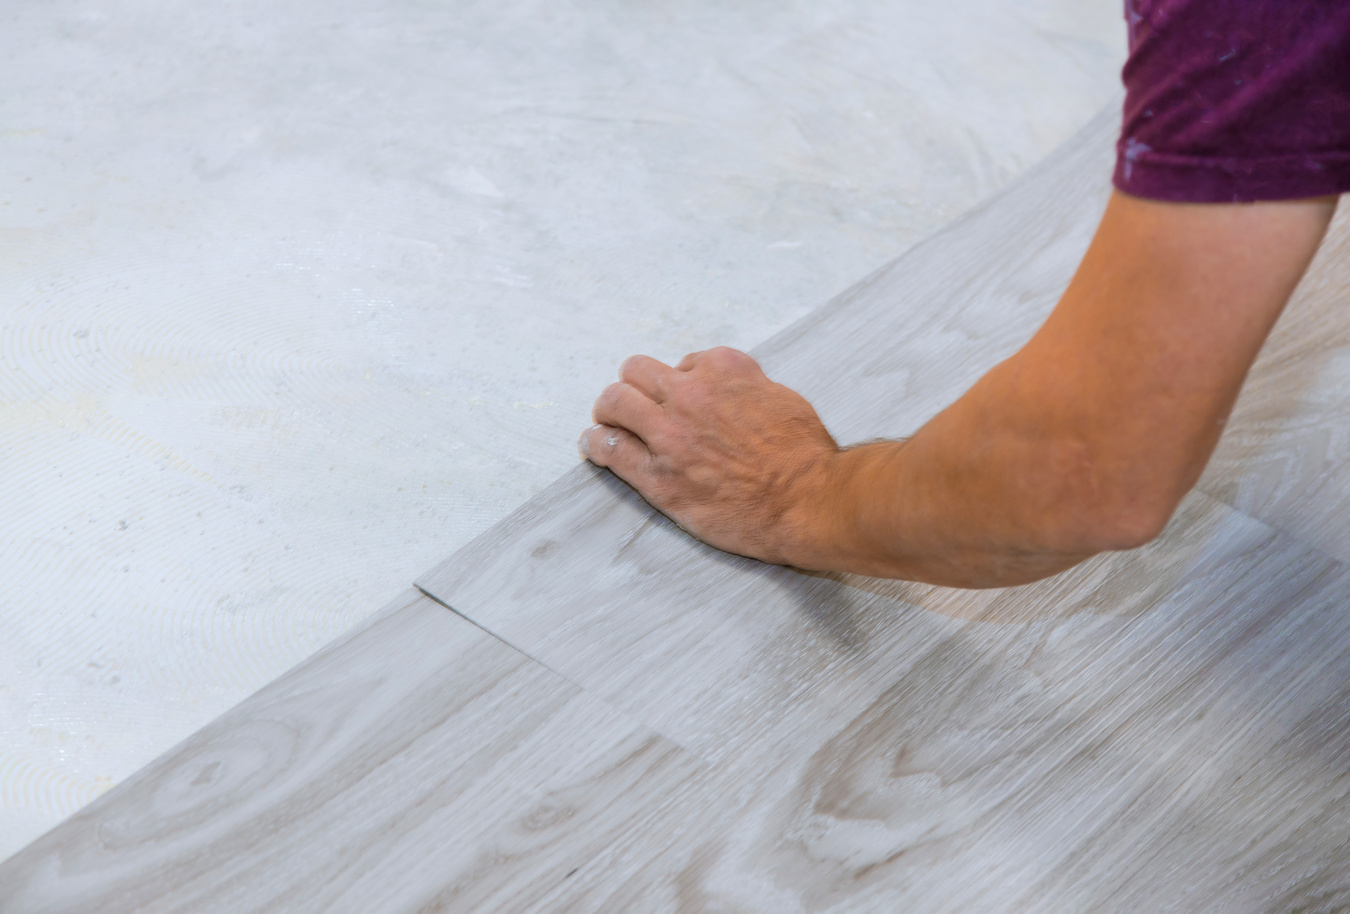 Worker Installing New Vinyl Tile Laminate Floor